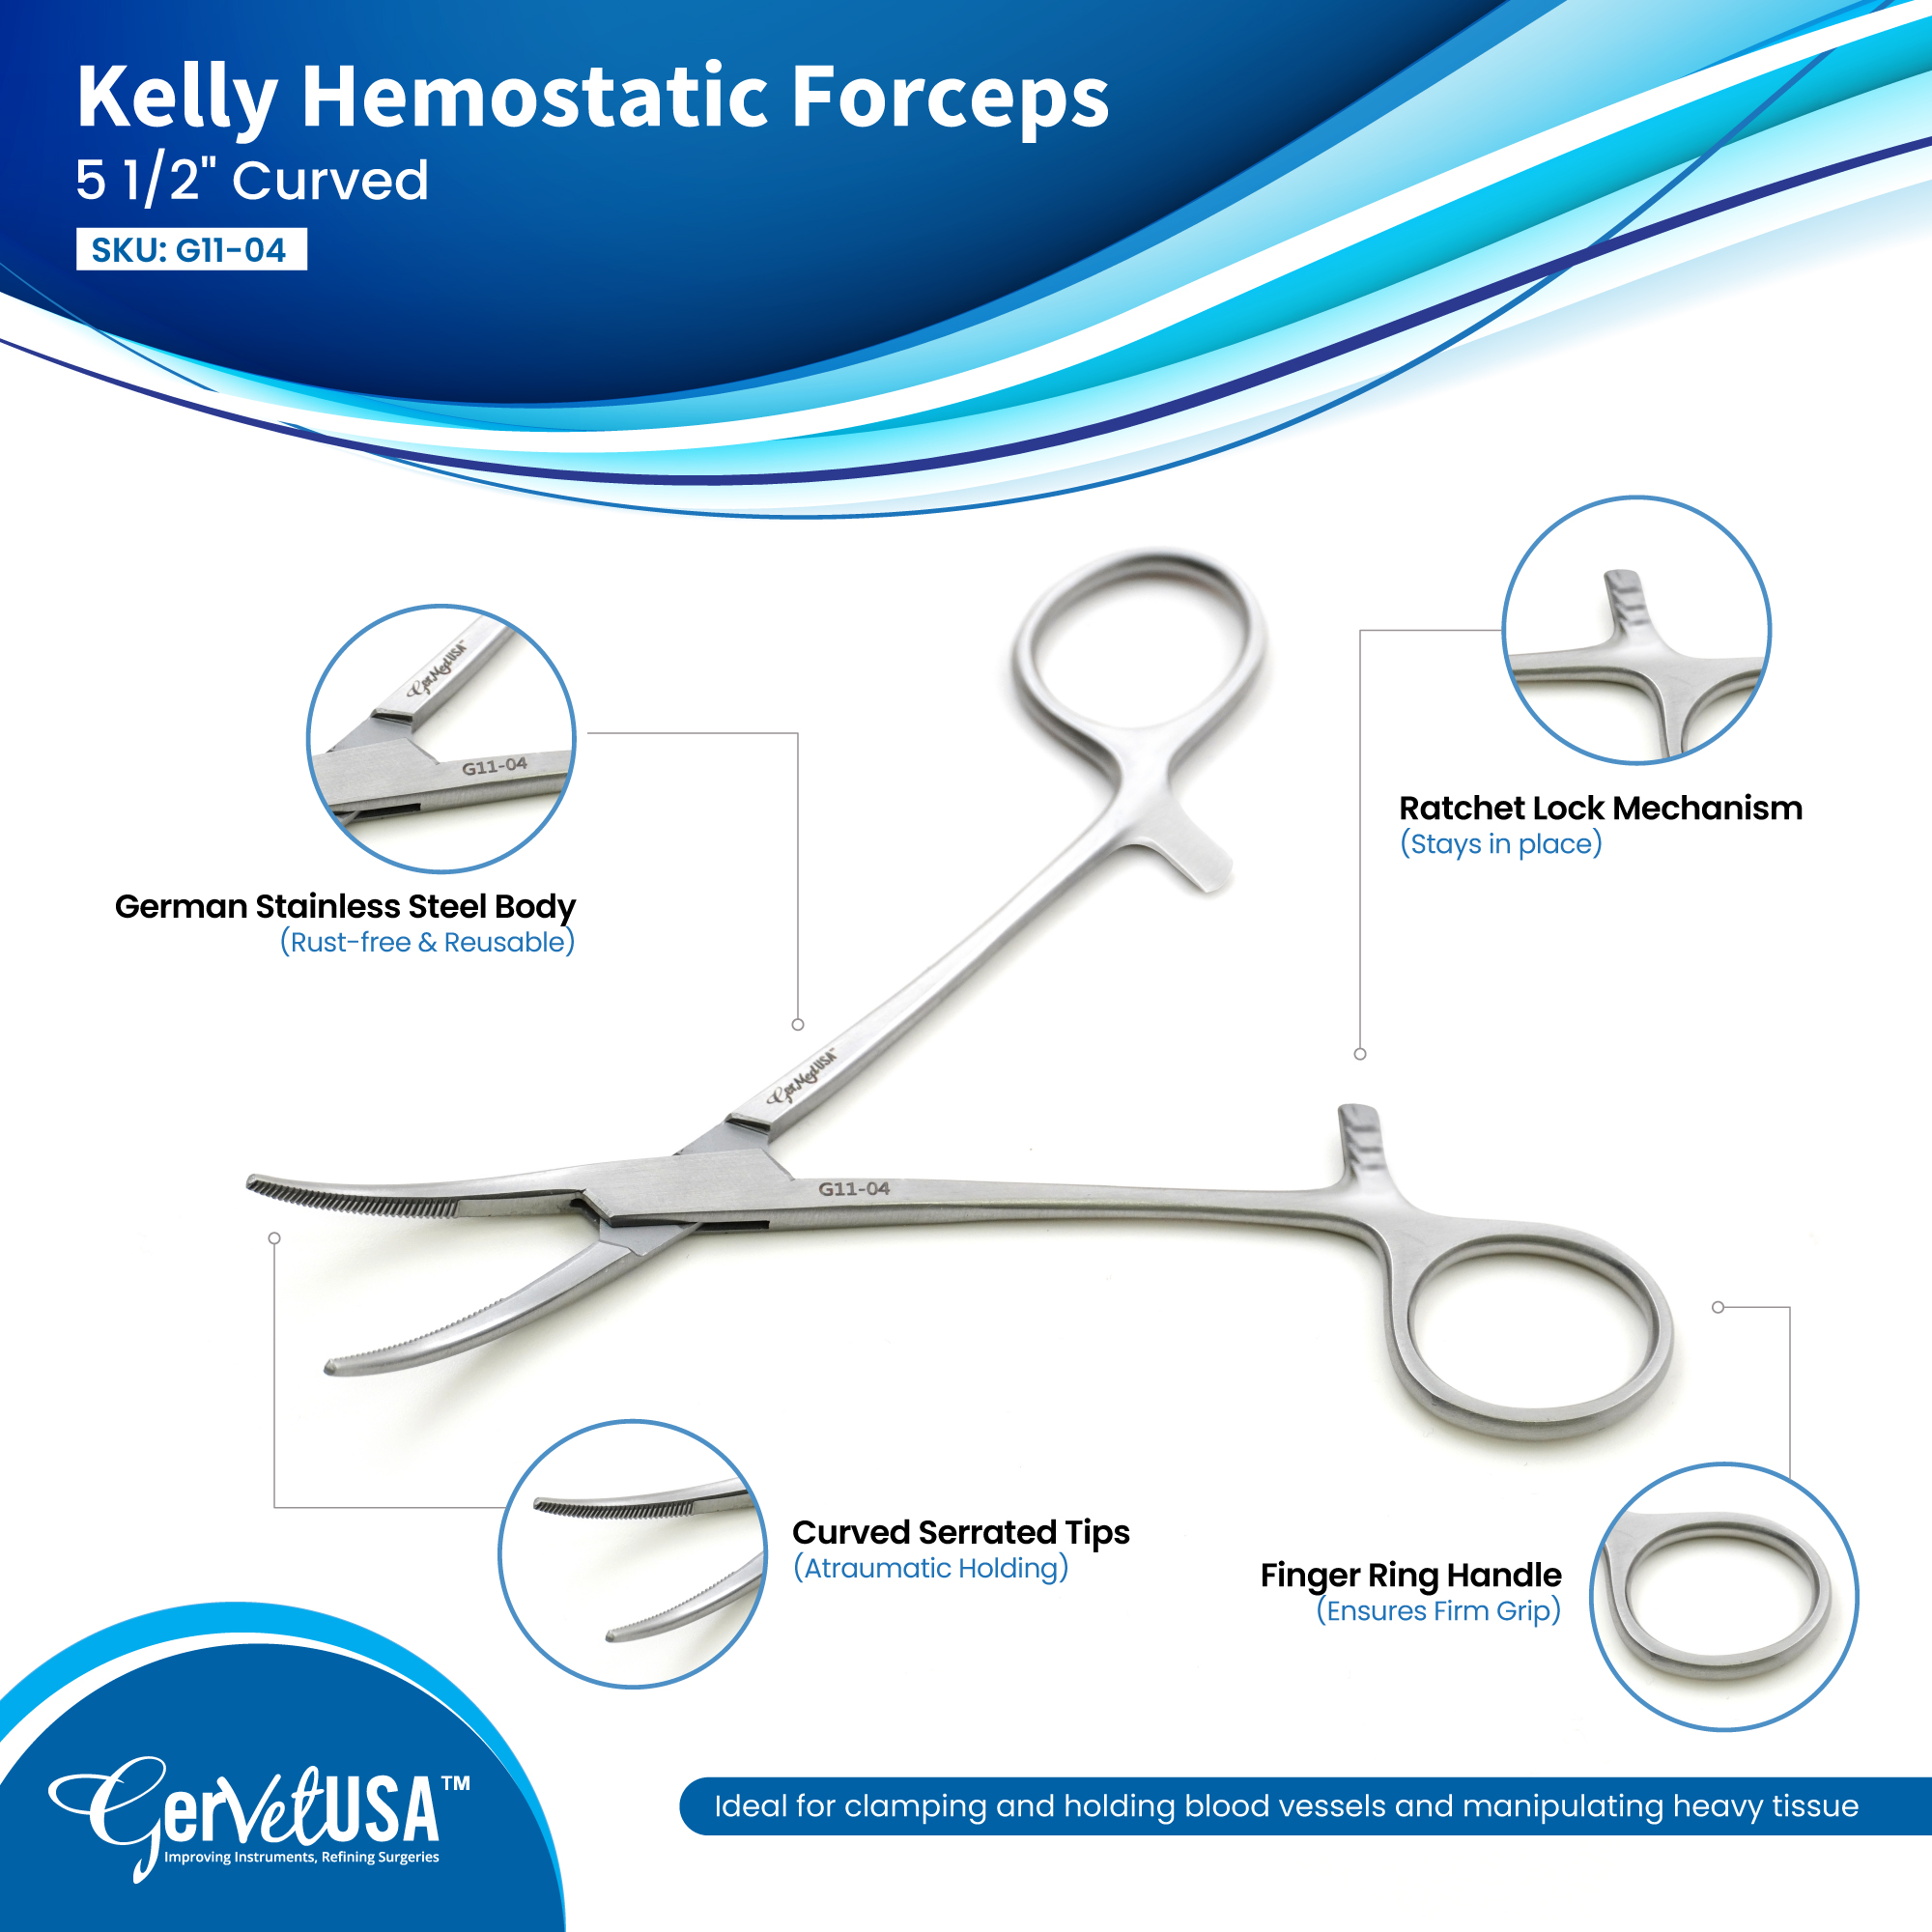 Kelly Hemostatic Forceps 5 1/2" Curved